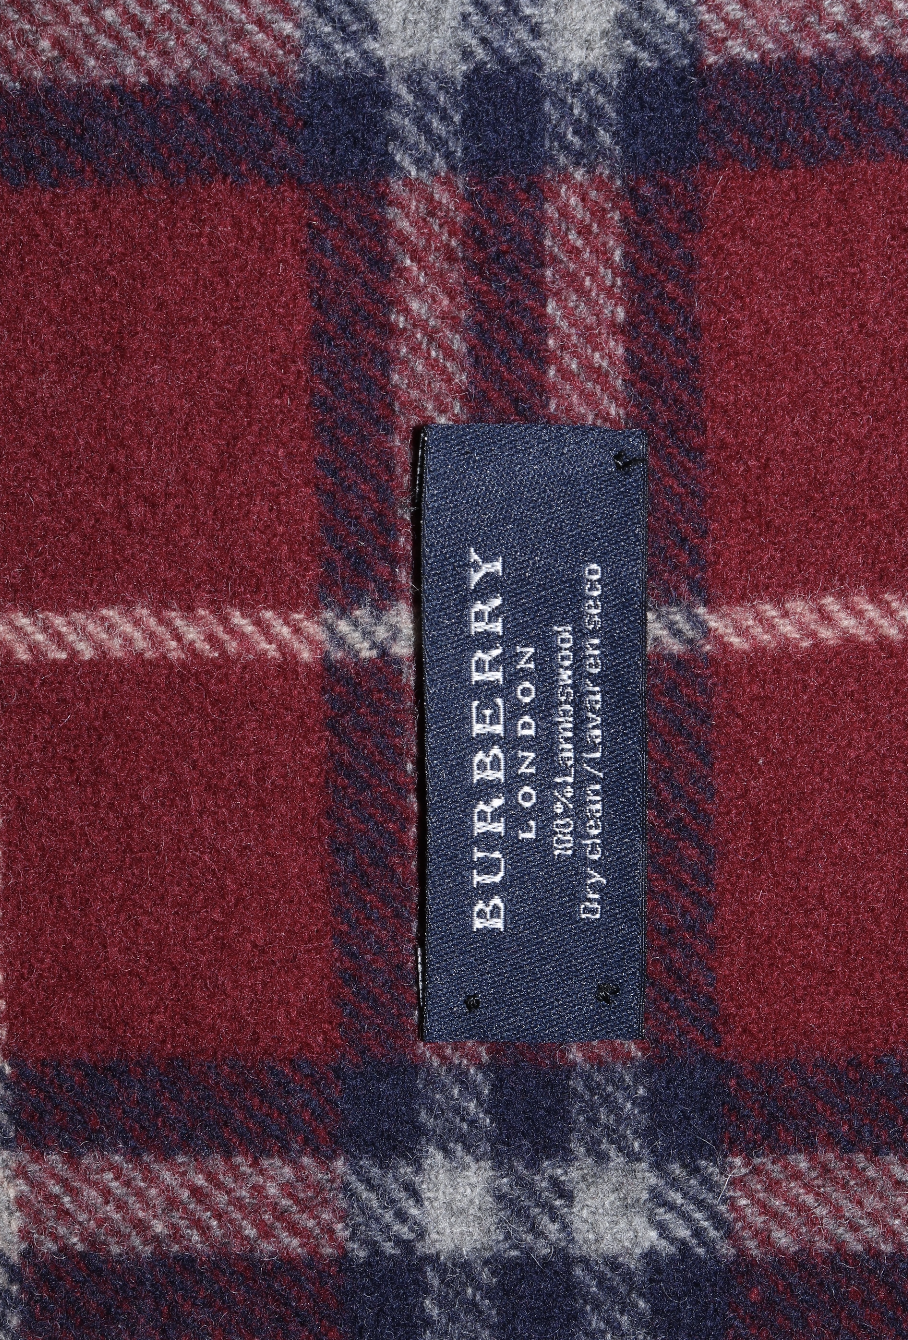 Burberry Print Scarf